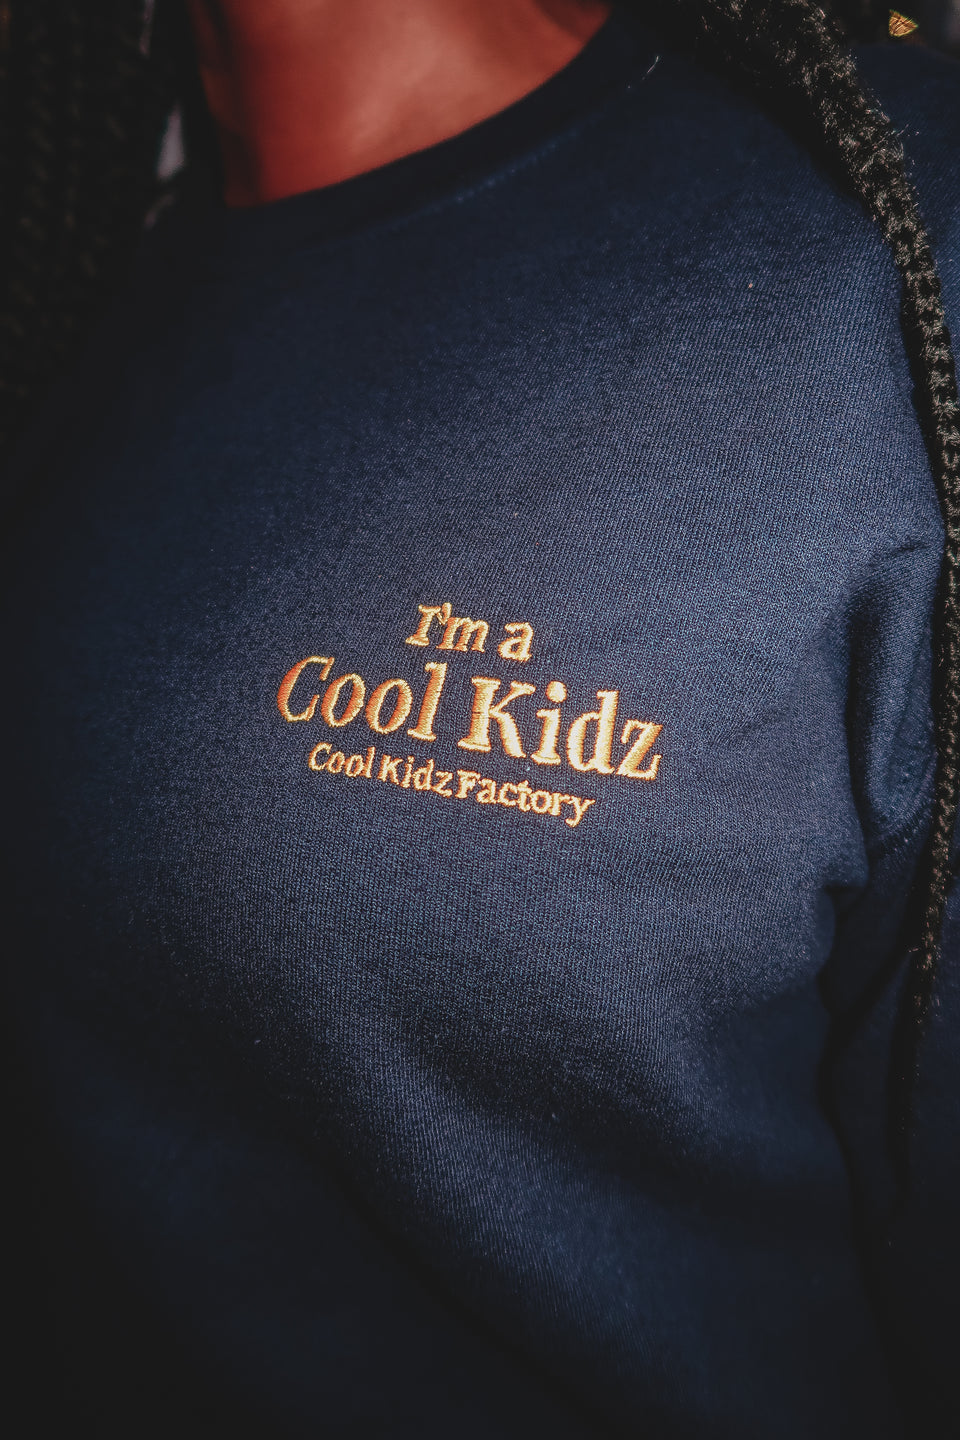 Cool Kidz Factory - Le Hoodie unisex brodé “cool kidz”